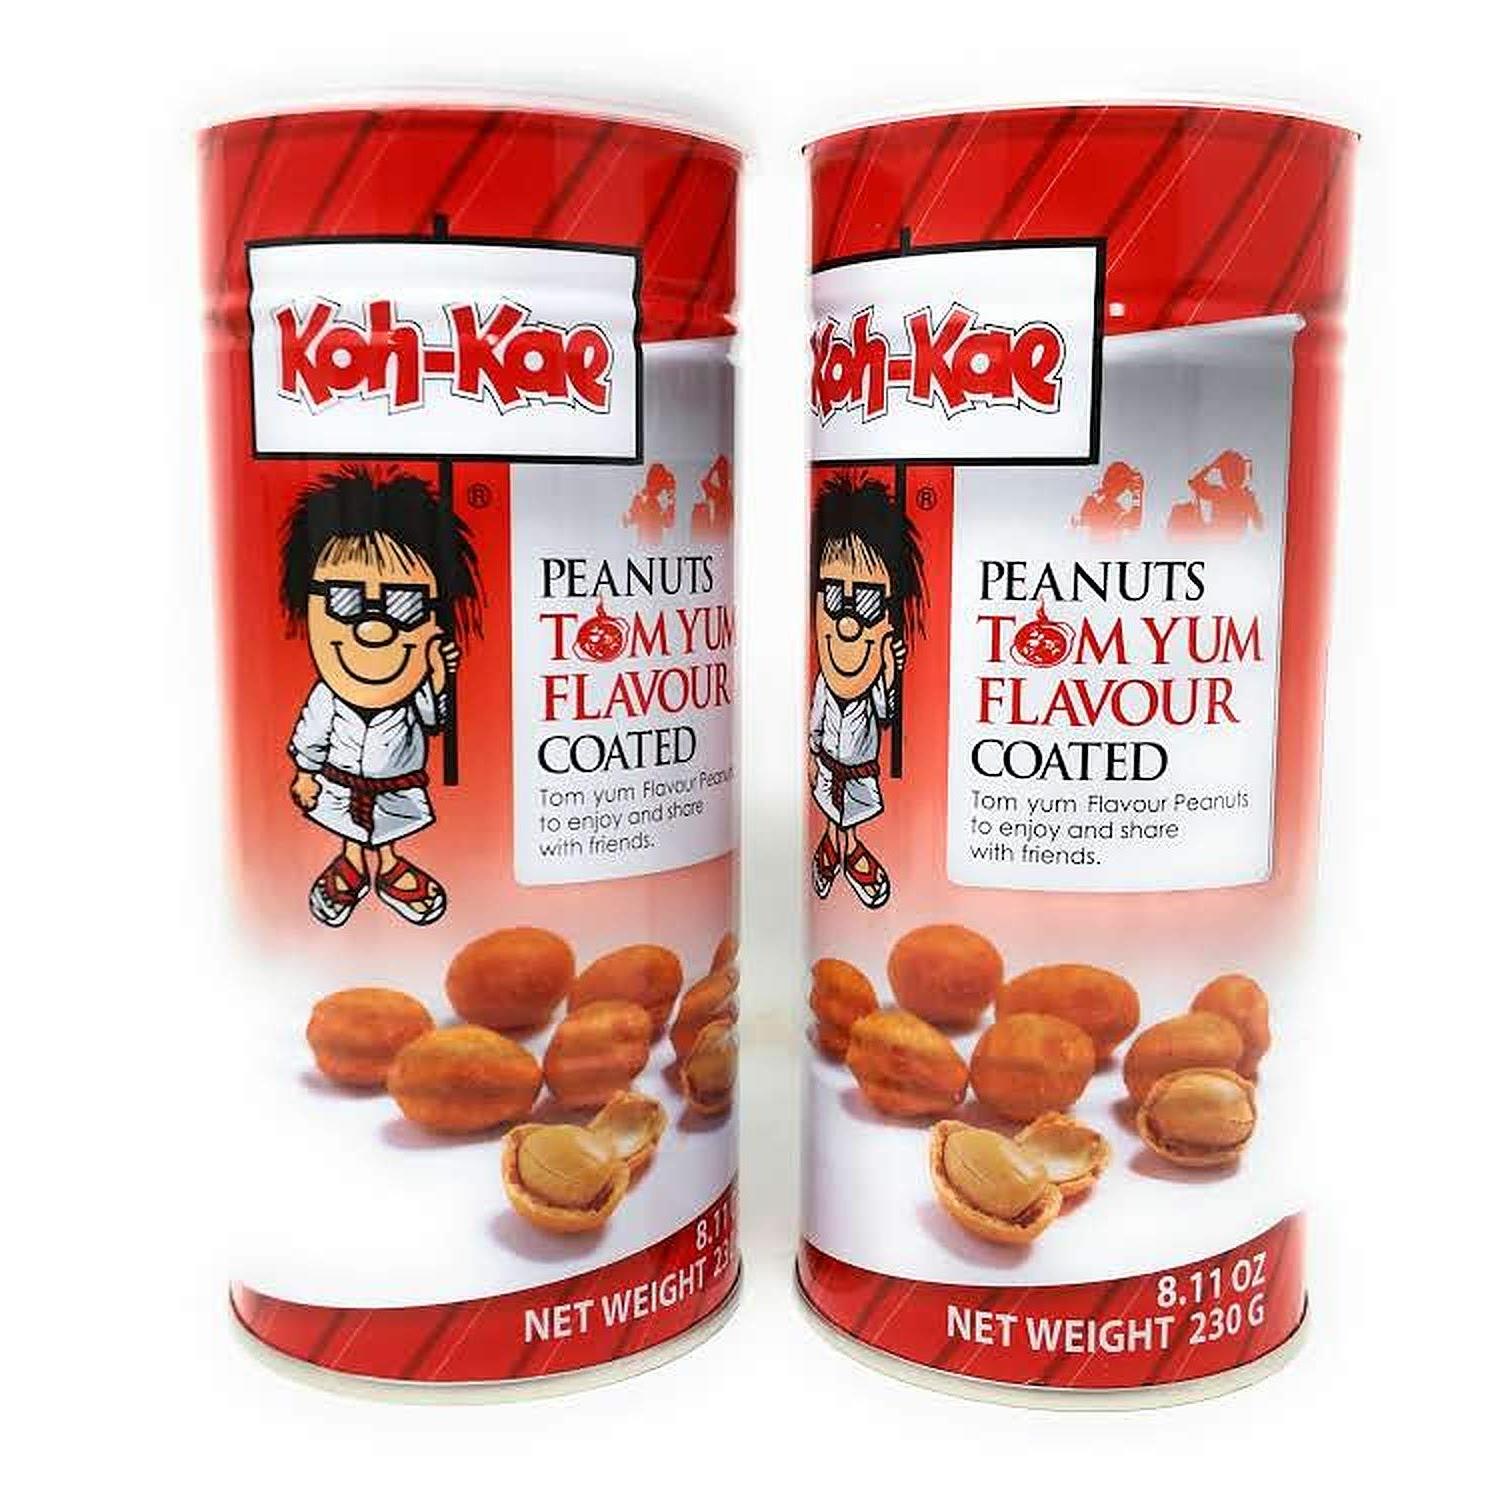 Koh-Kae Peanuts Tom Yum Flavor Coated 8.11oz (230g), 2 Pack